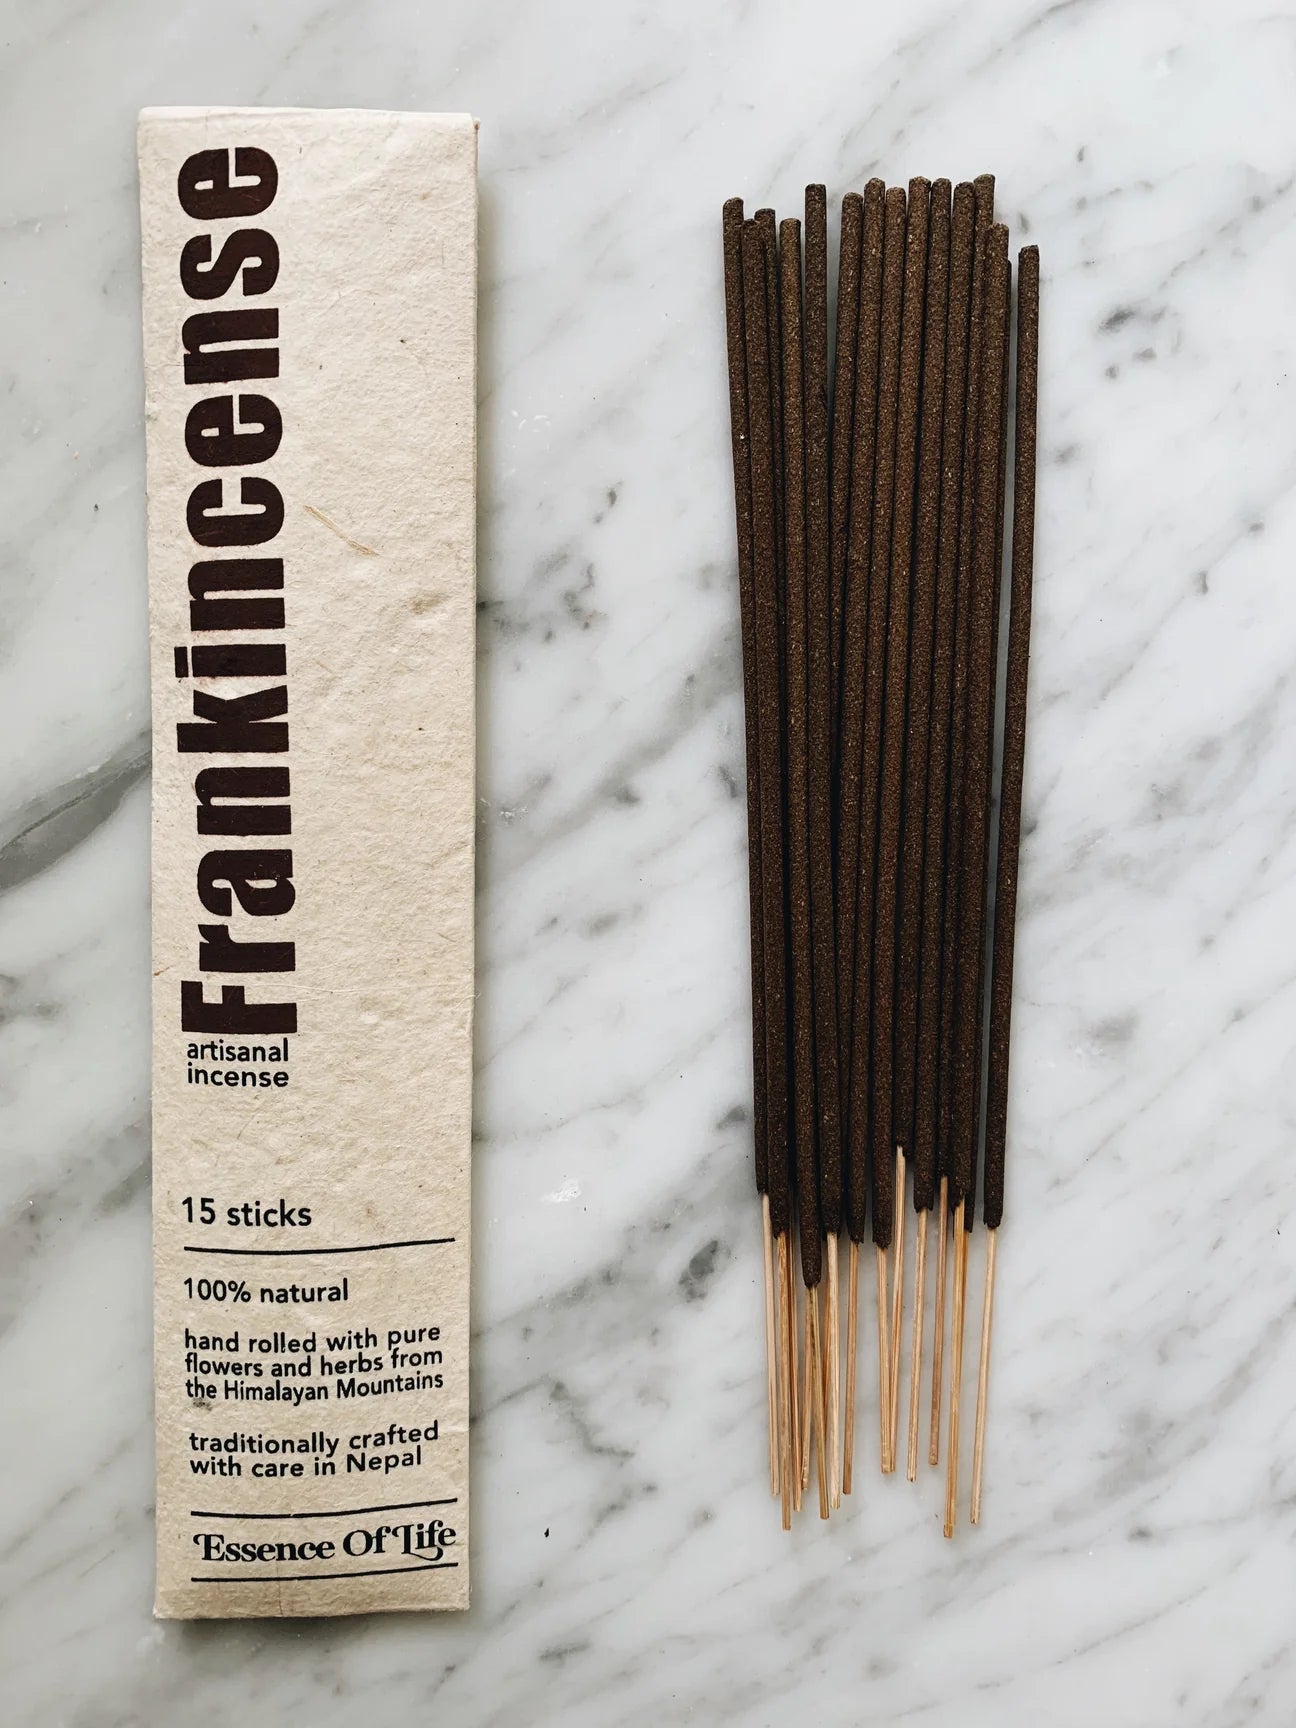 Essence of Life - Frankincense artisanal incense